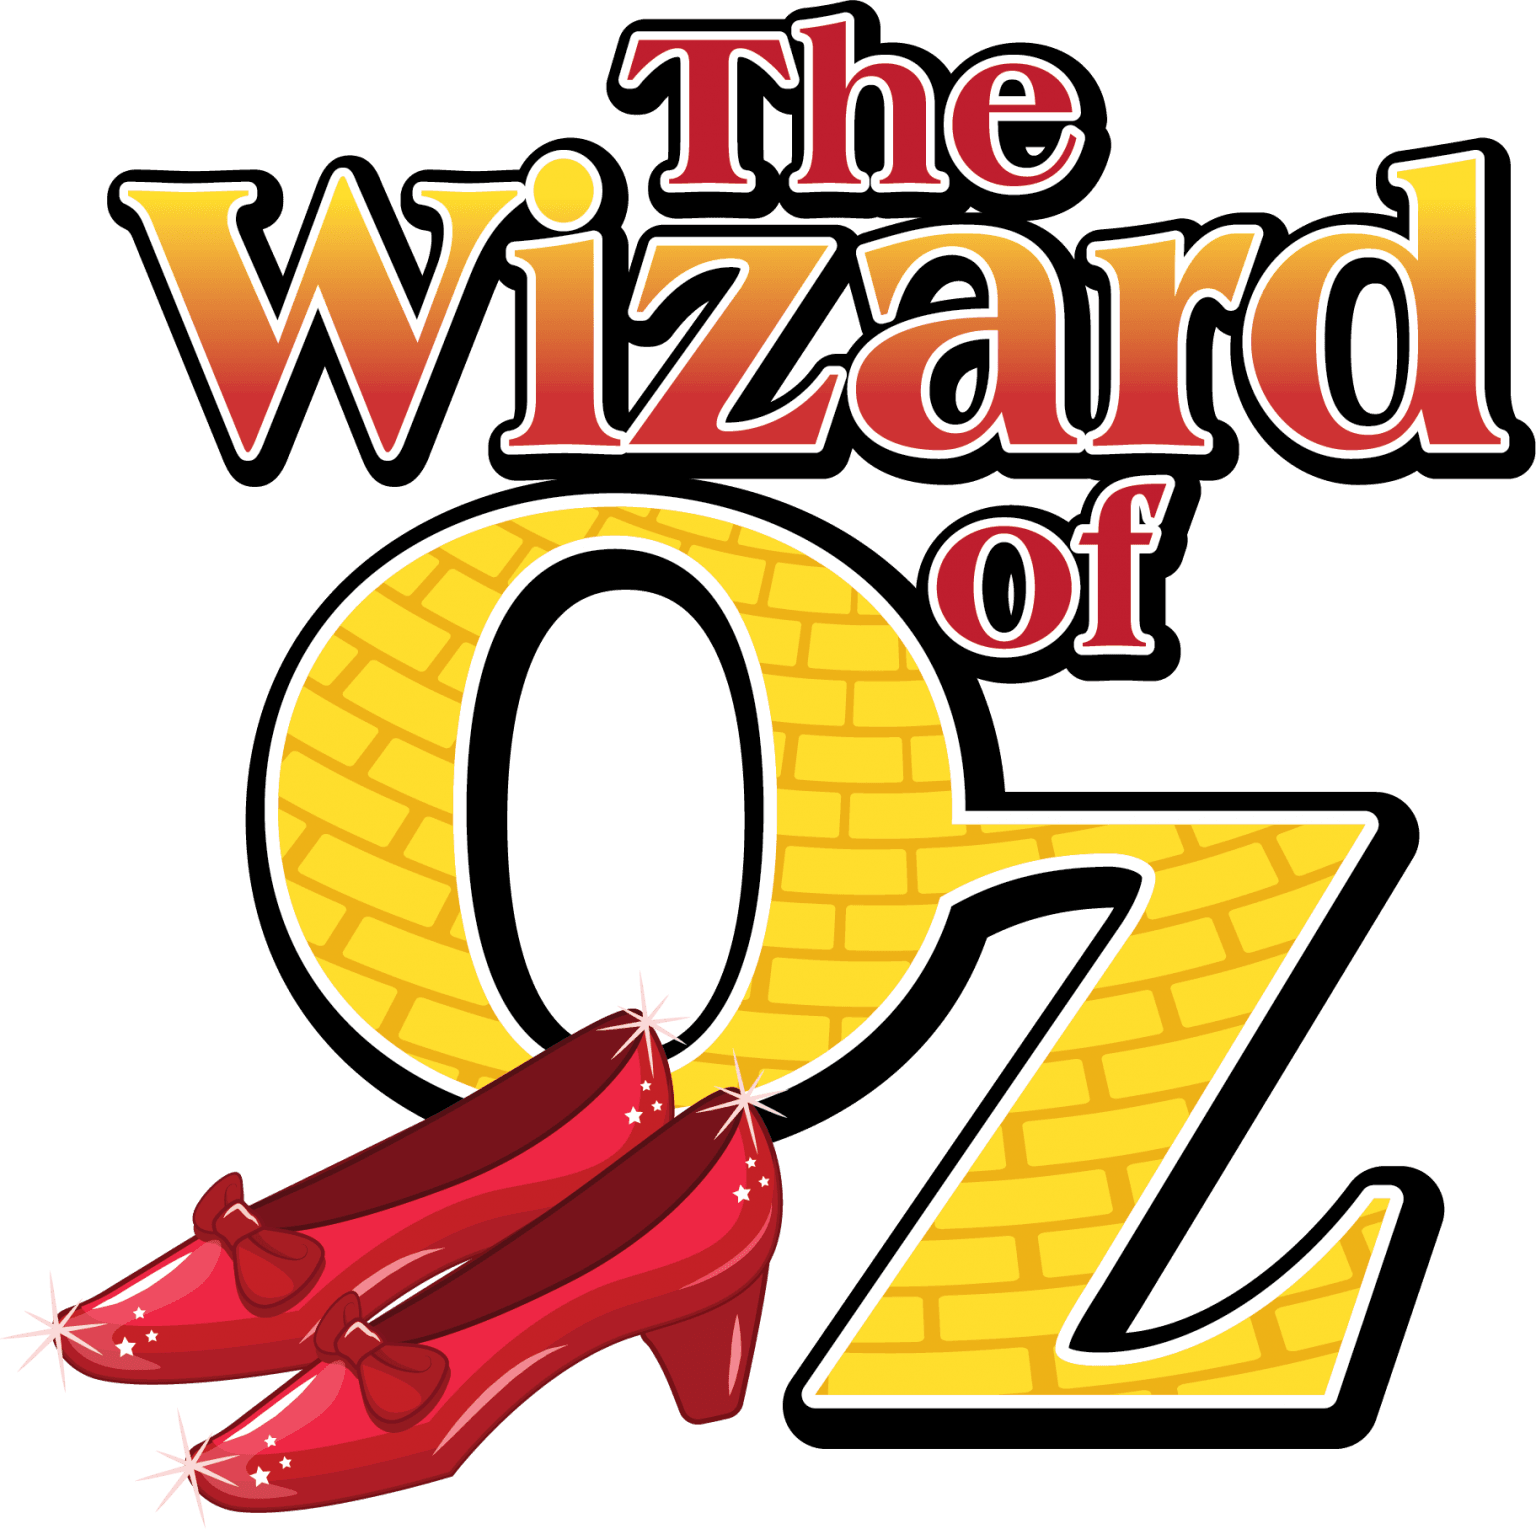 Wizard of Oz logo Broadway Palm Dinner Theatre